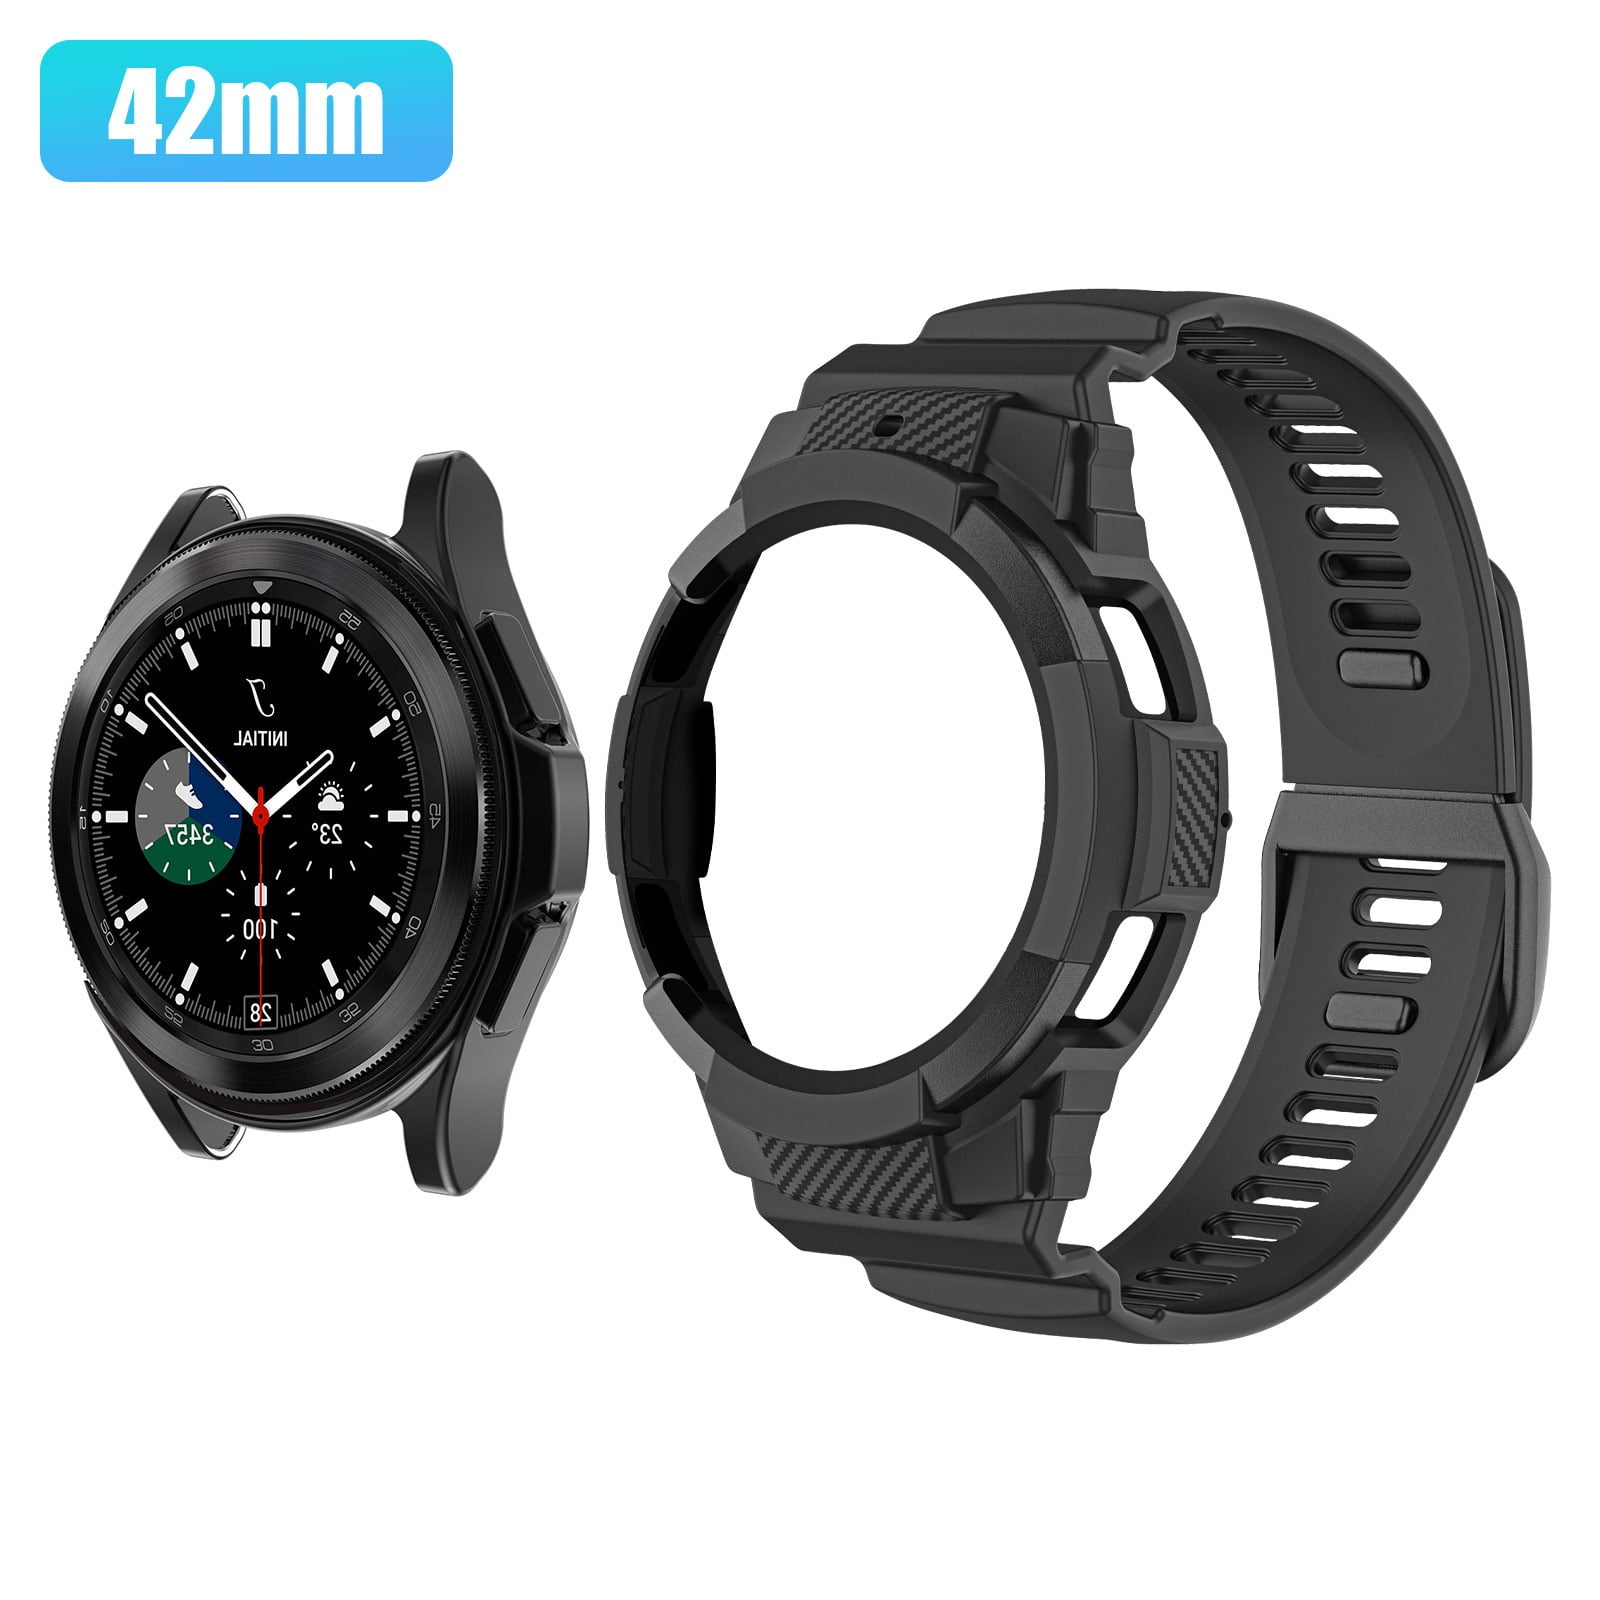 Galaxy Watch (42mm) Watch Band Modern Fit (20mm) Black